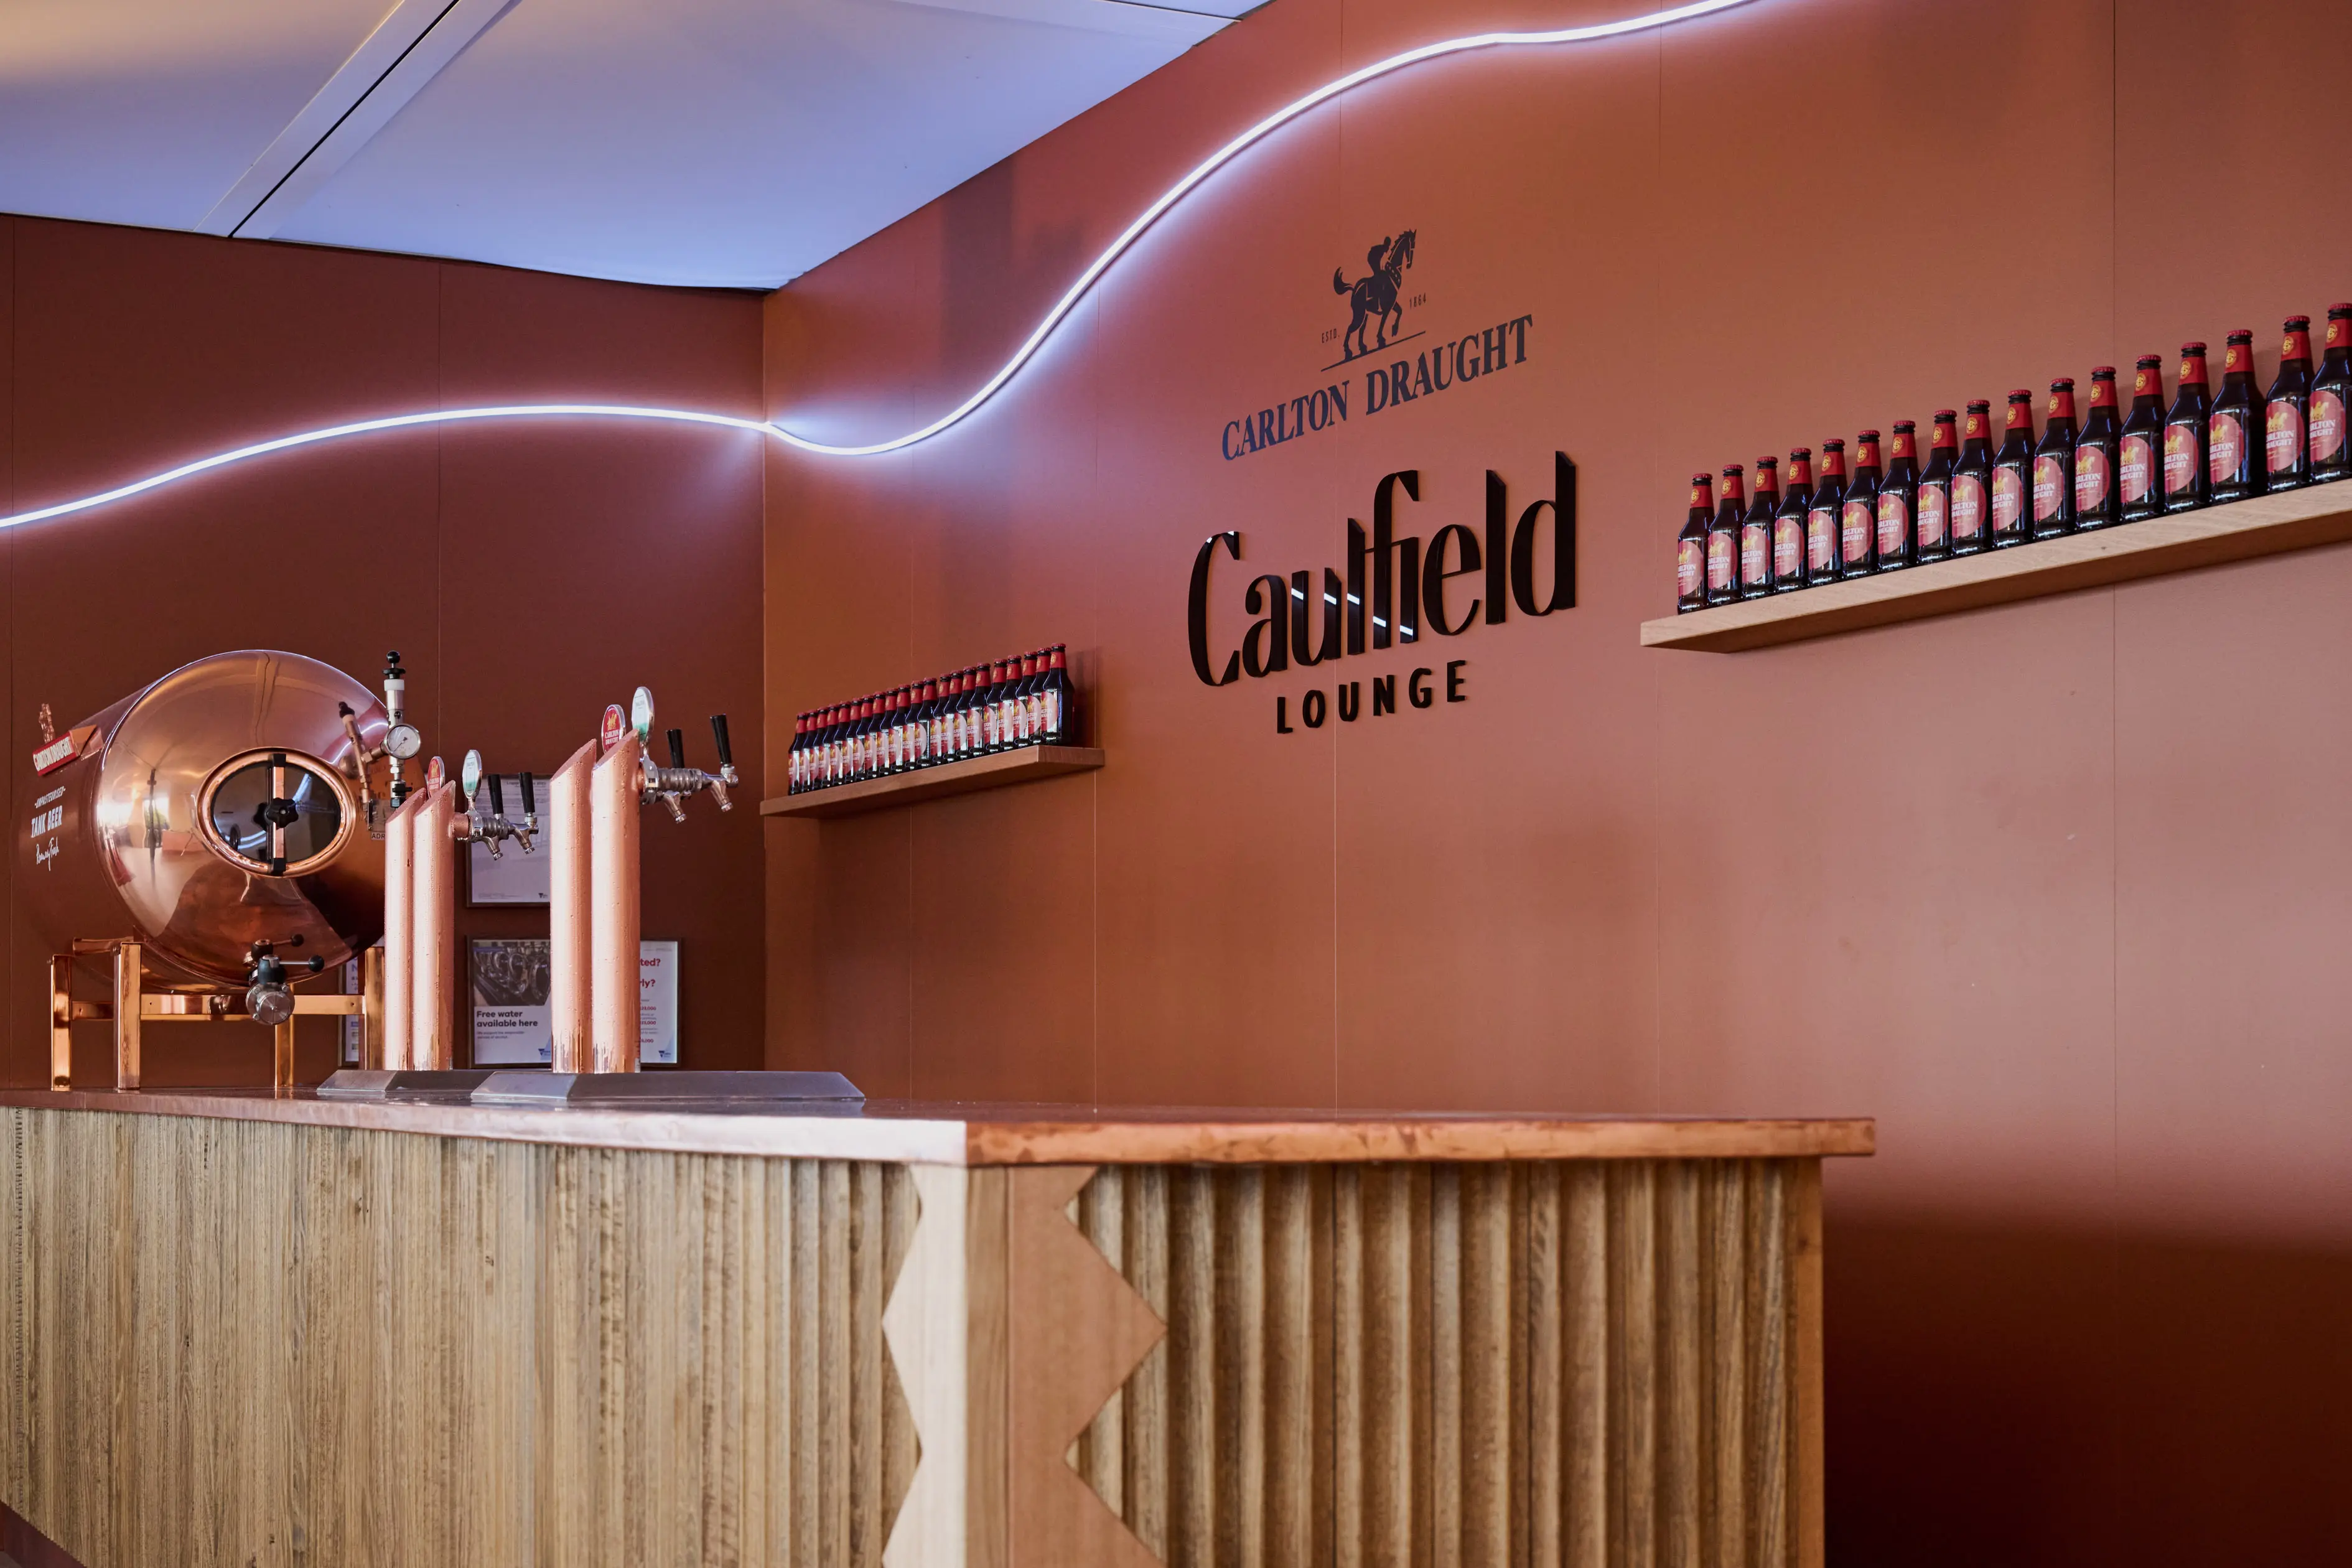 Carlton Draught Caulfield Lounge - hospitality interior design, event and activation - Caulfield Racecourse, Melbourne, Australia